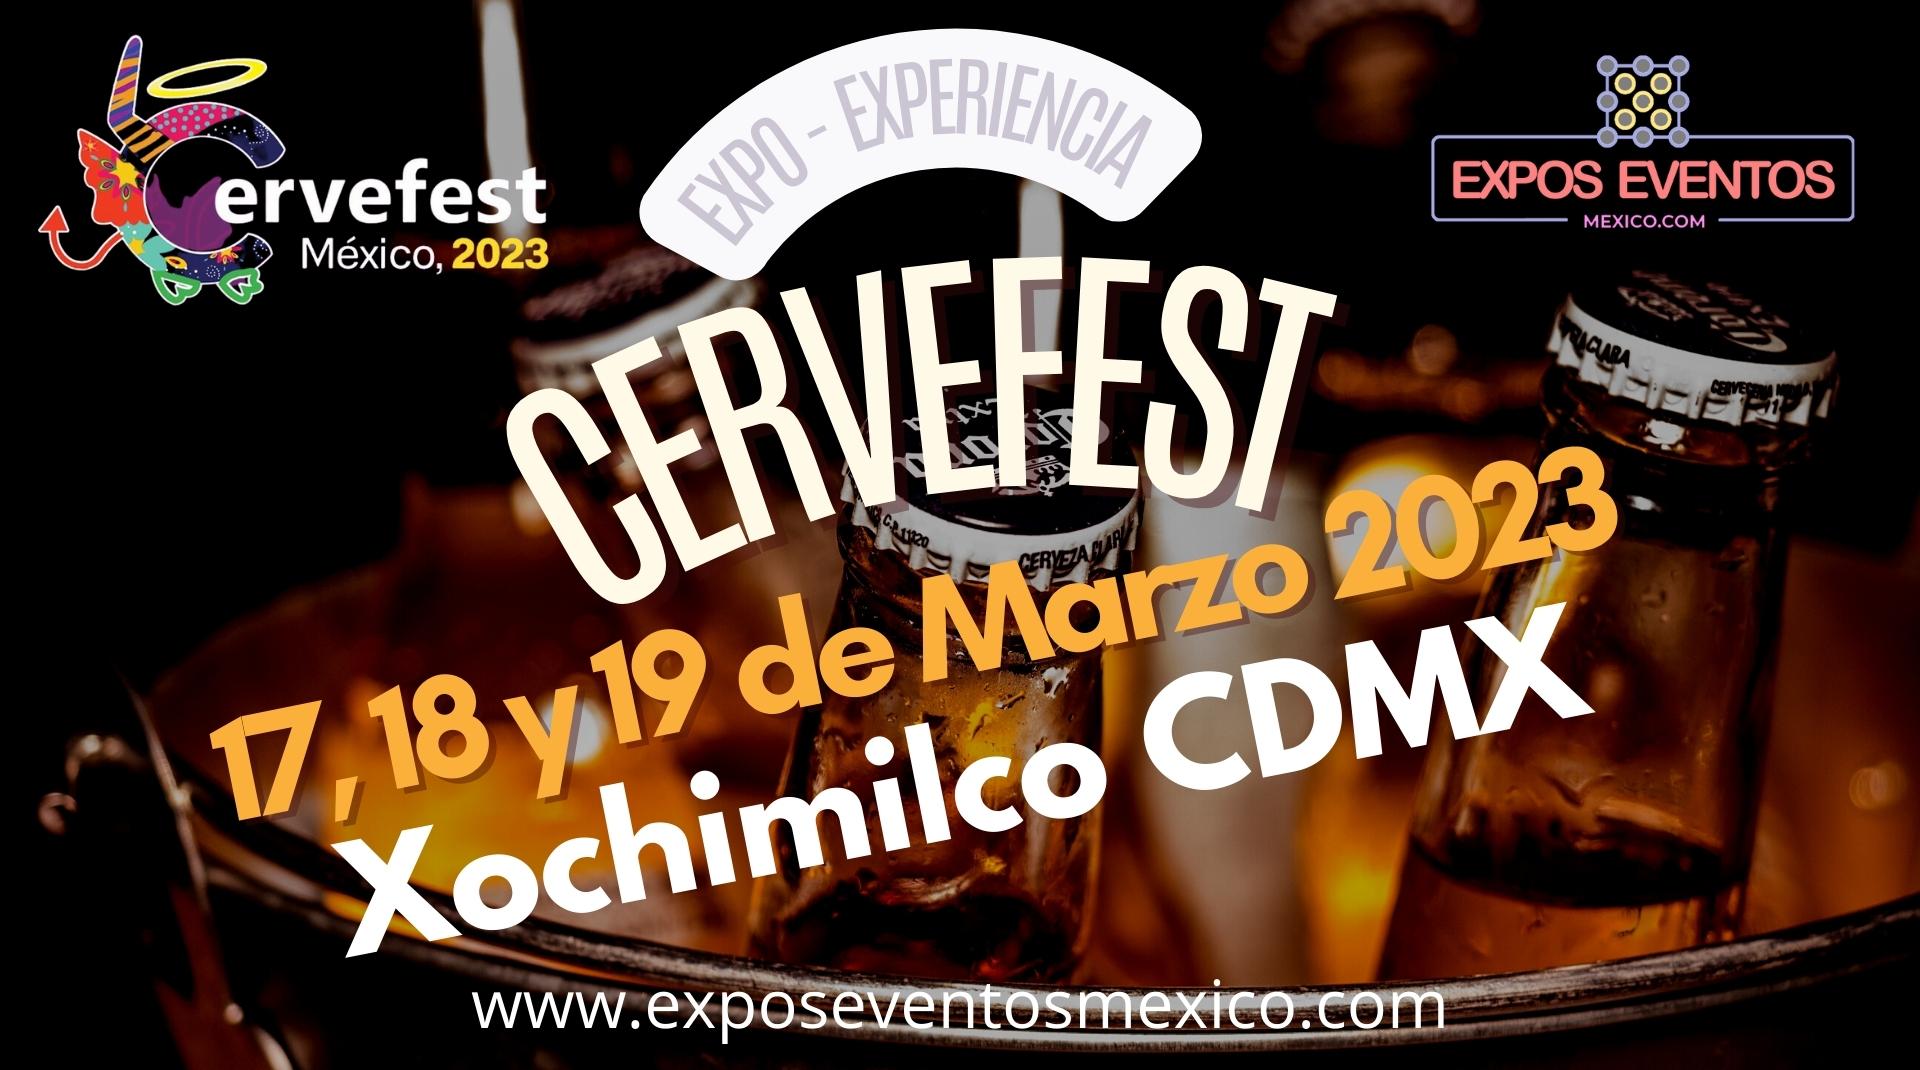 CerveFest 2023, Festival Internacional de la Cerveza, Expo Cerveza, Xochimilco CDMX